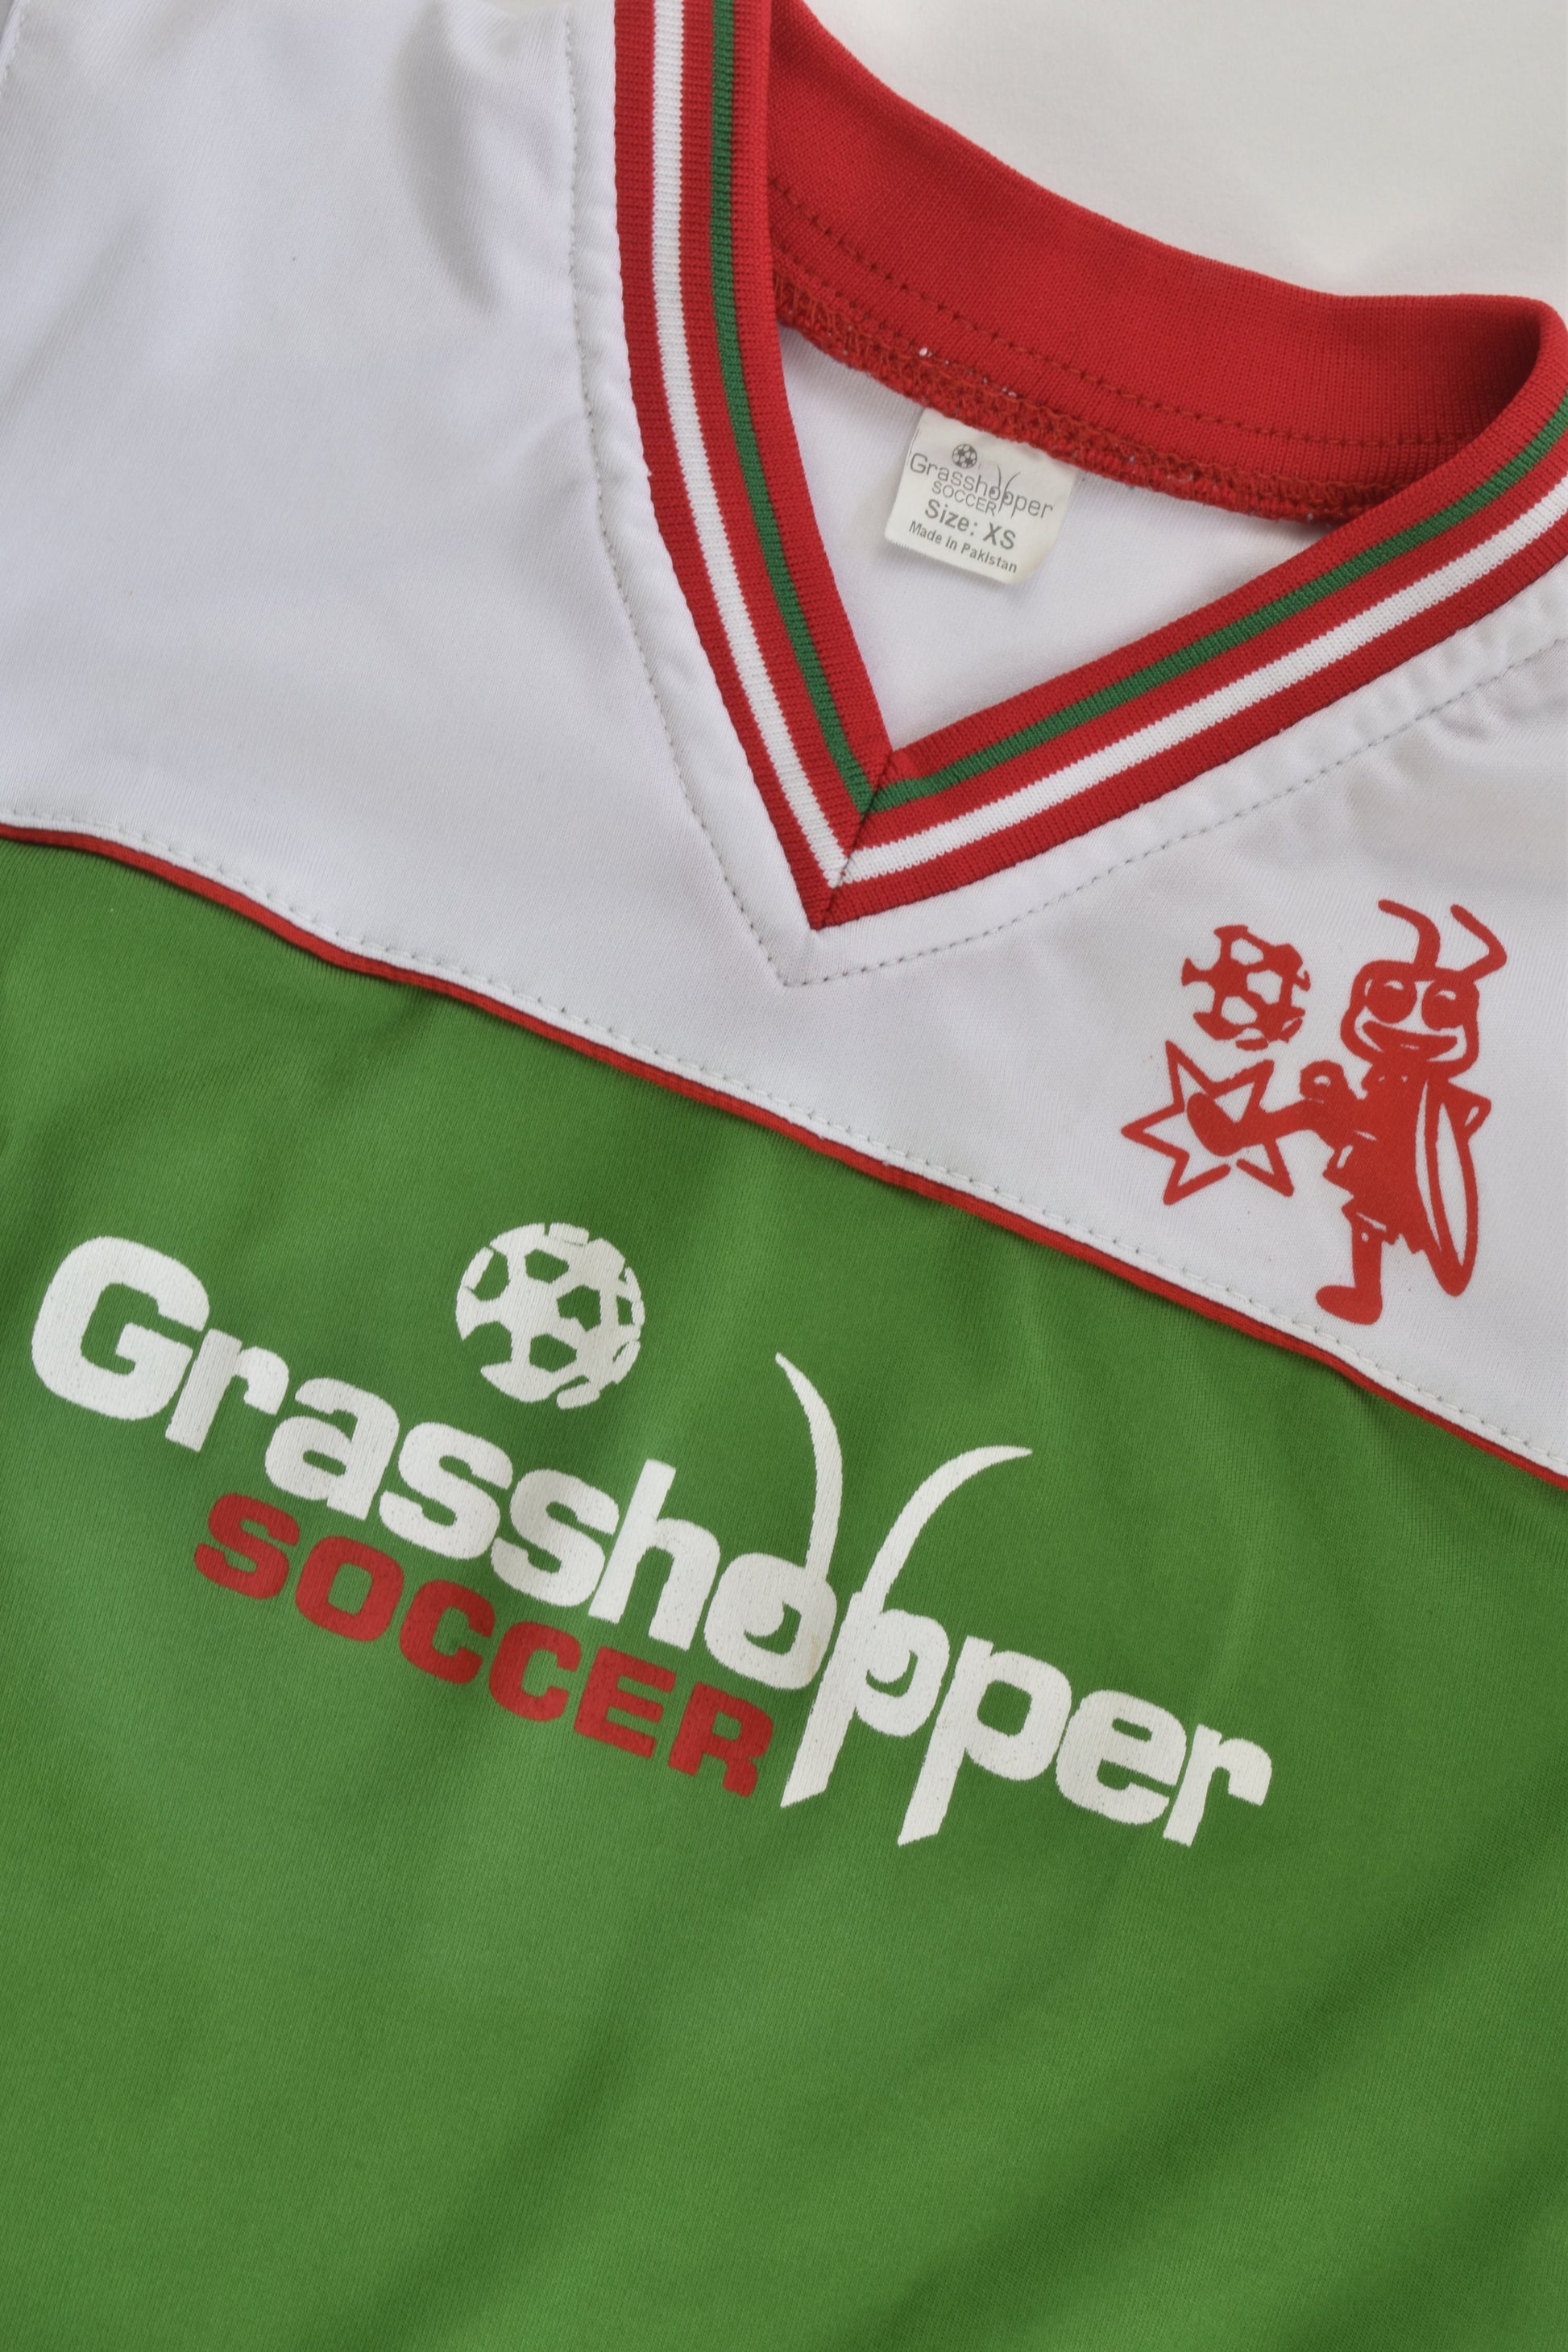 Grasshopper Soccer Size XS (7-8) Shirt and Shorts